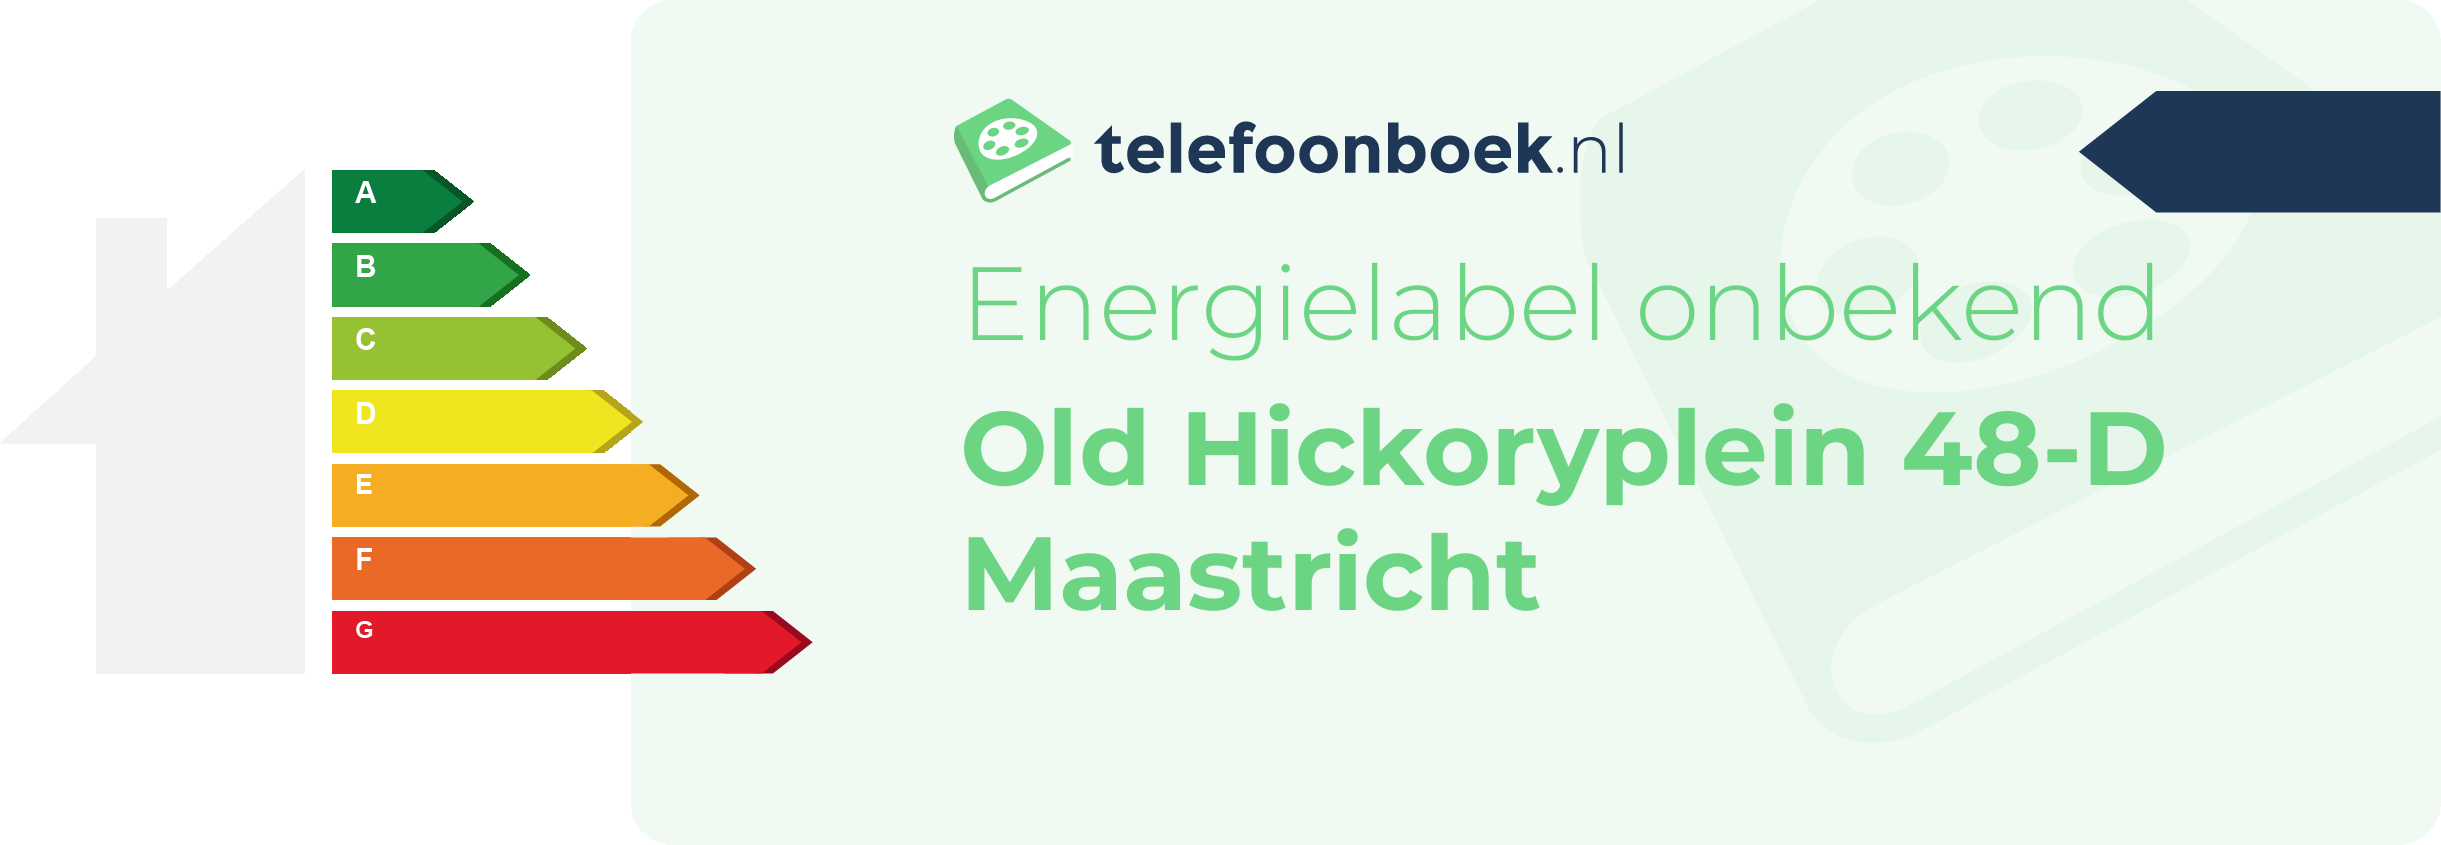 Energielabel Old Hickoryplein 48-D Maastricht